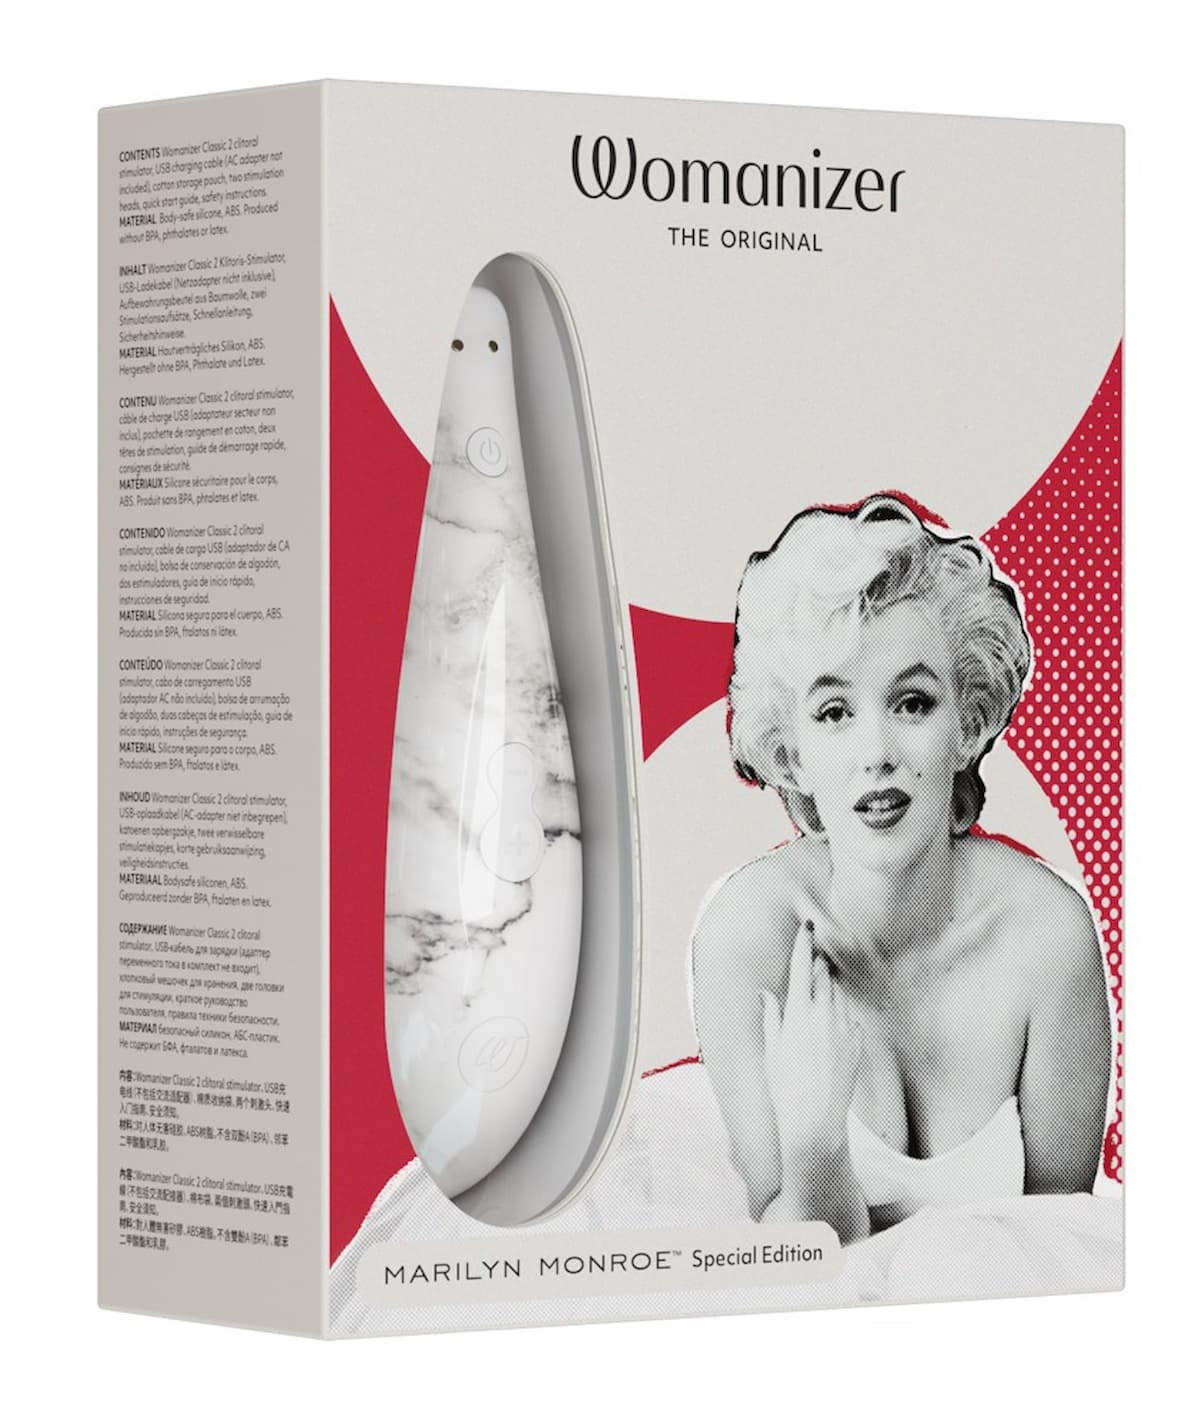 Marilyn White Monroe WOMANIZER Vibrator